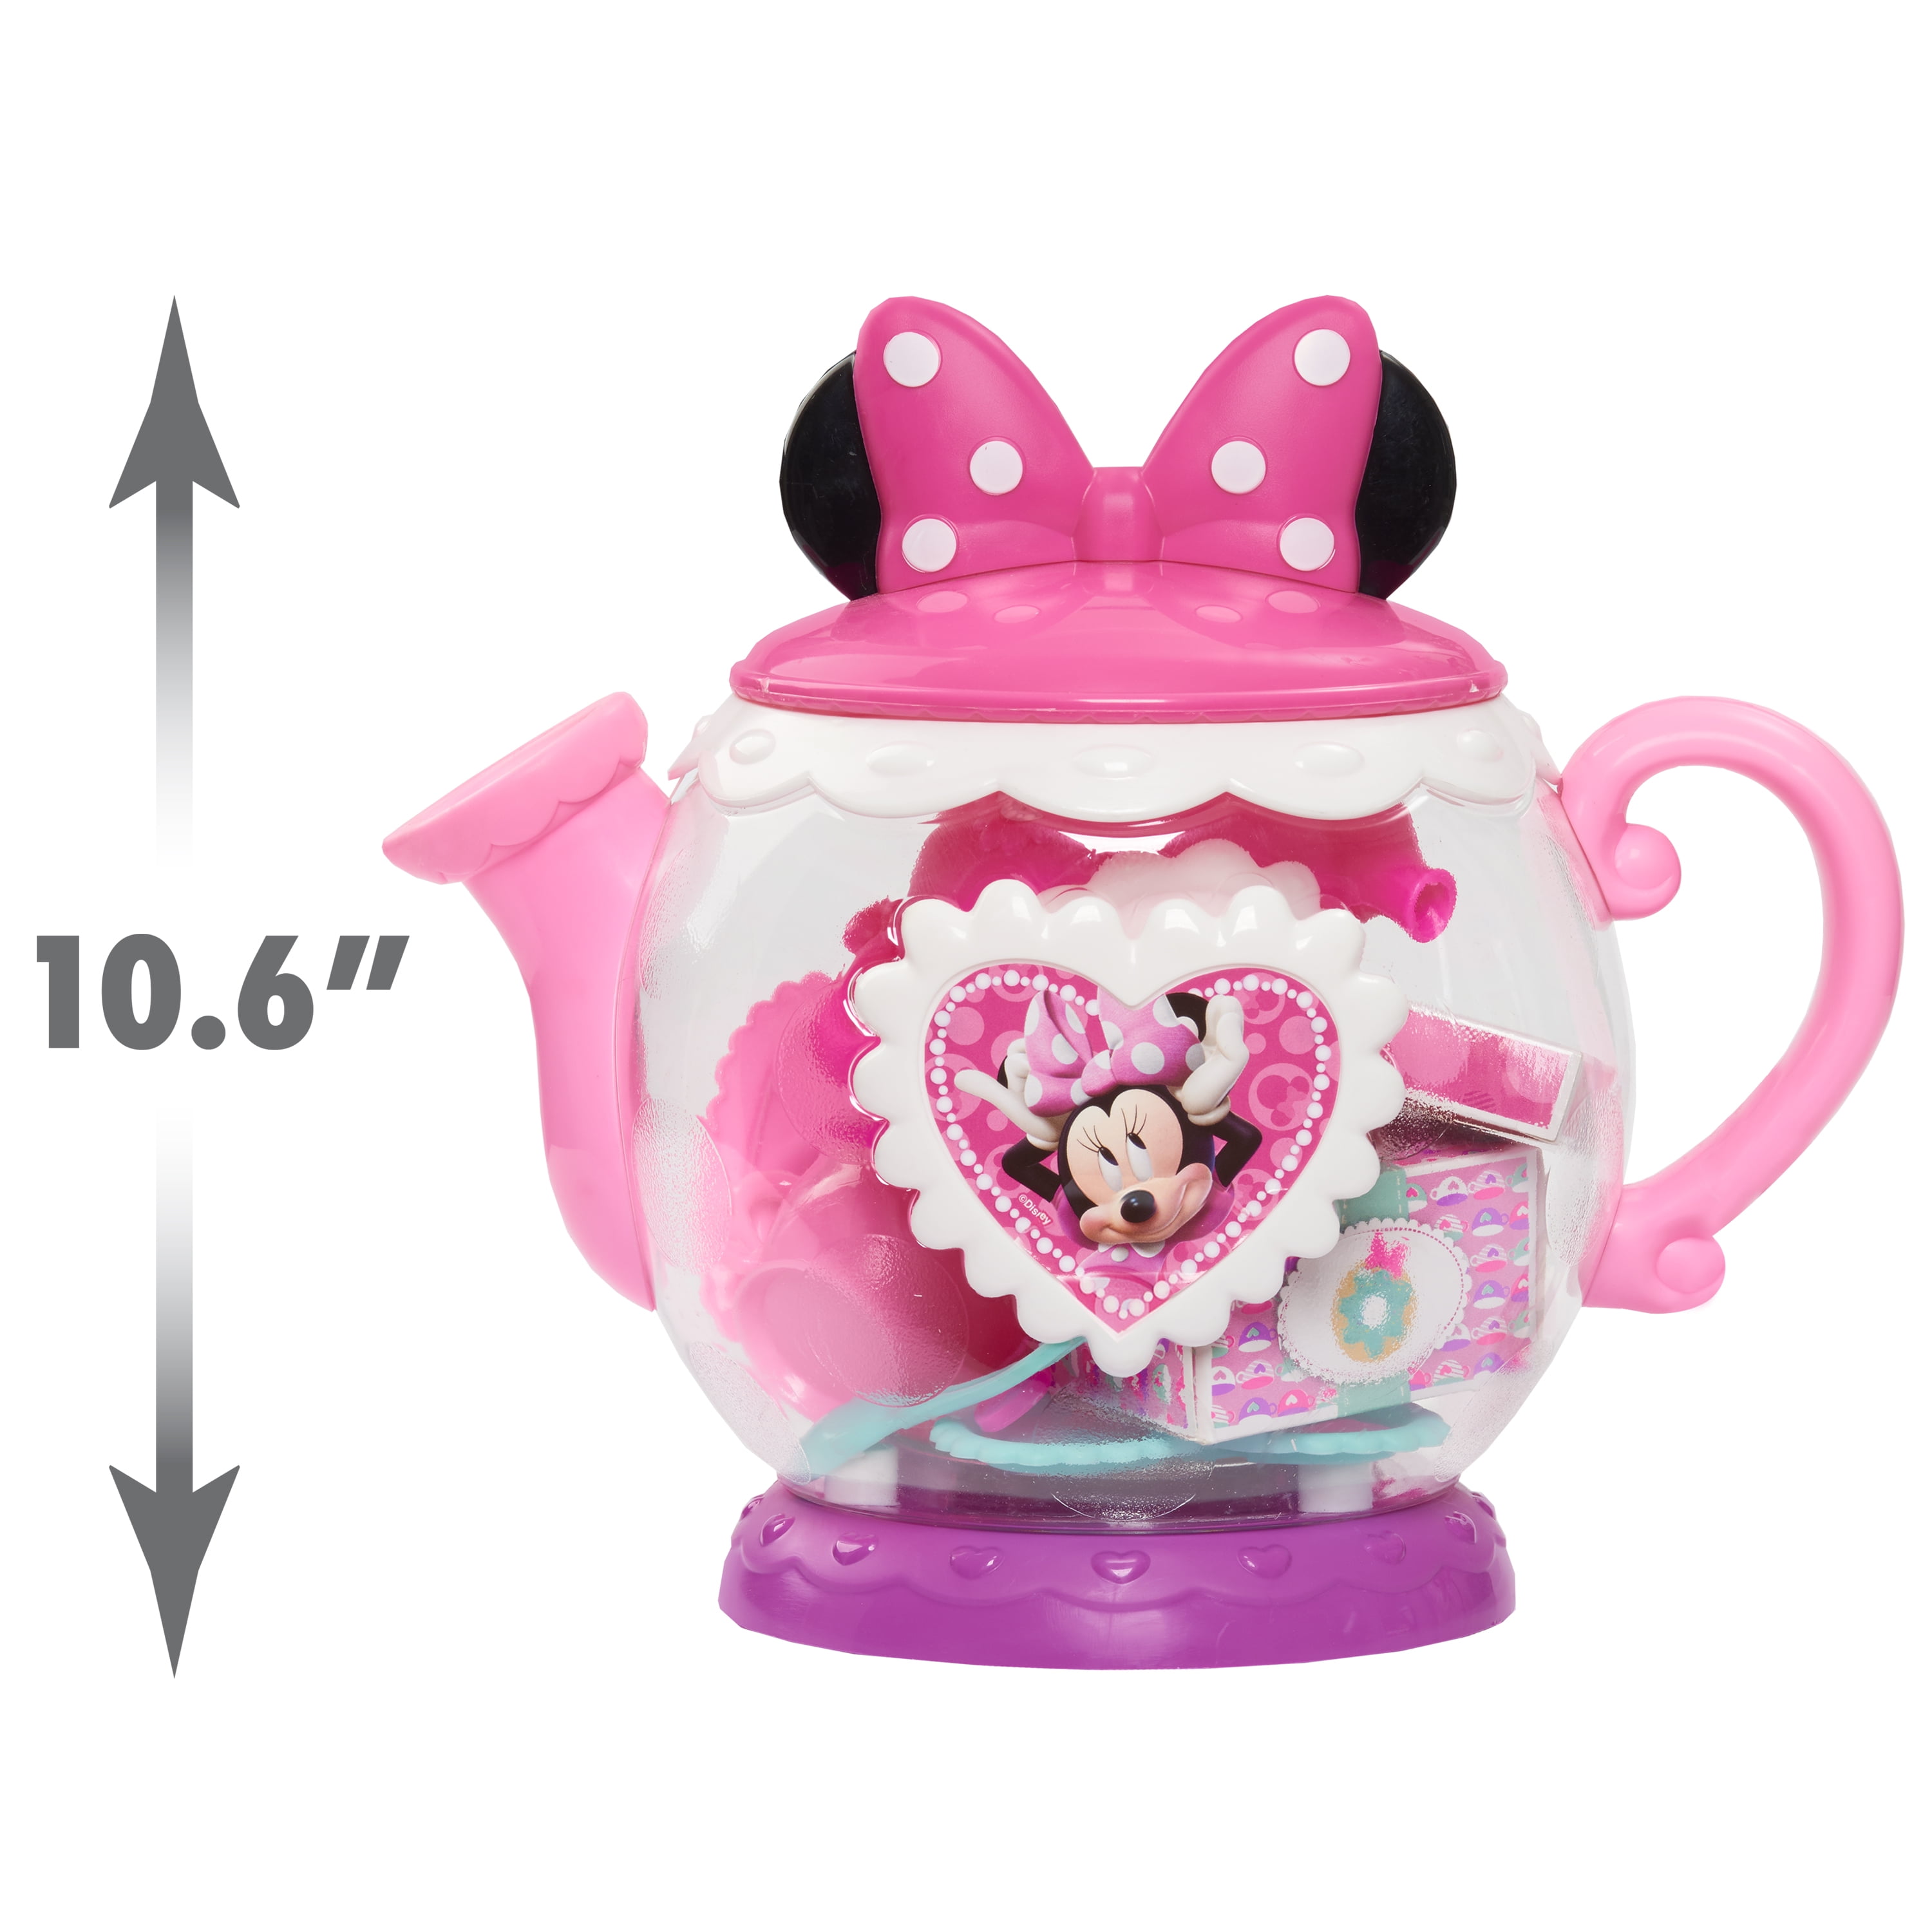 Minnie Mouse Tea Set 